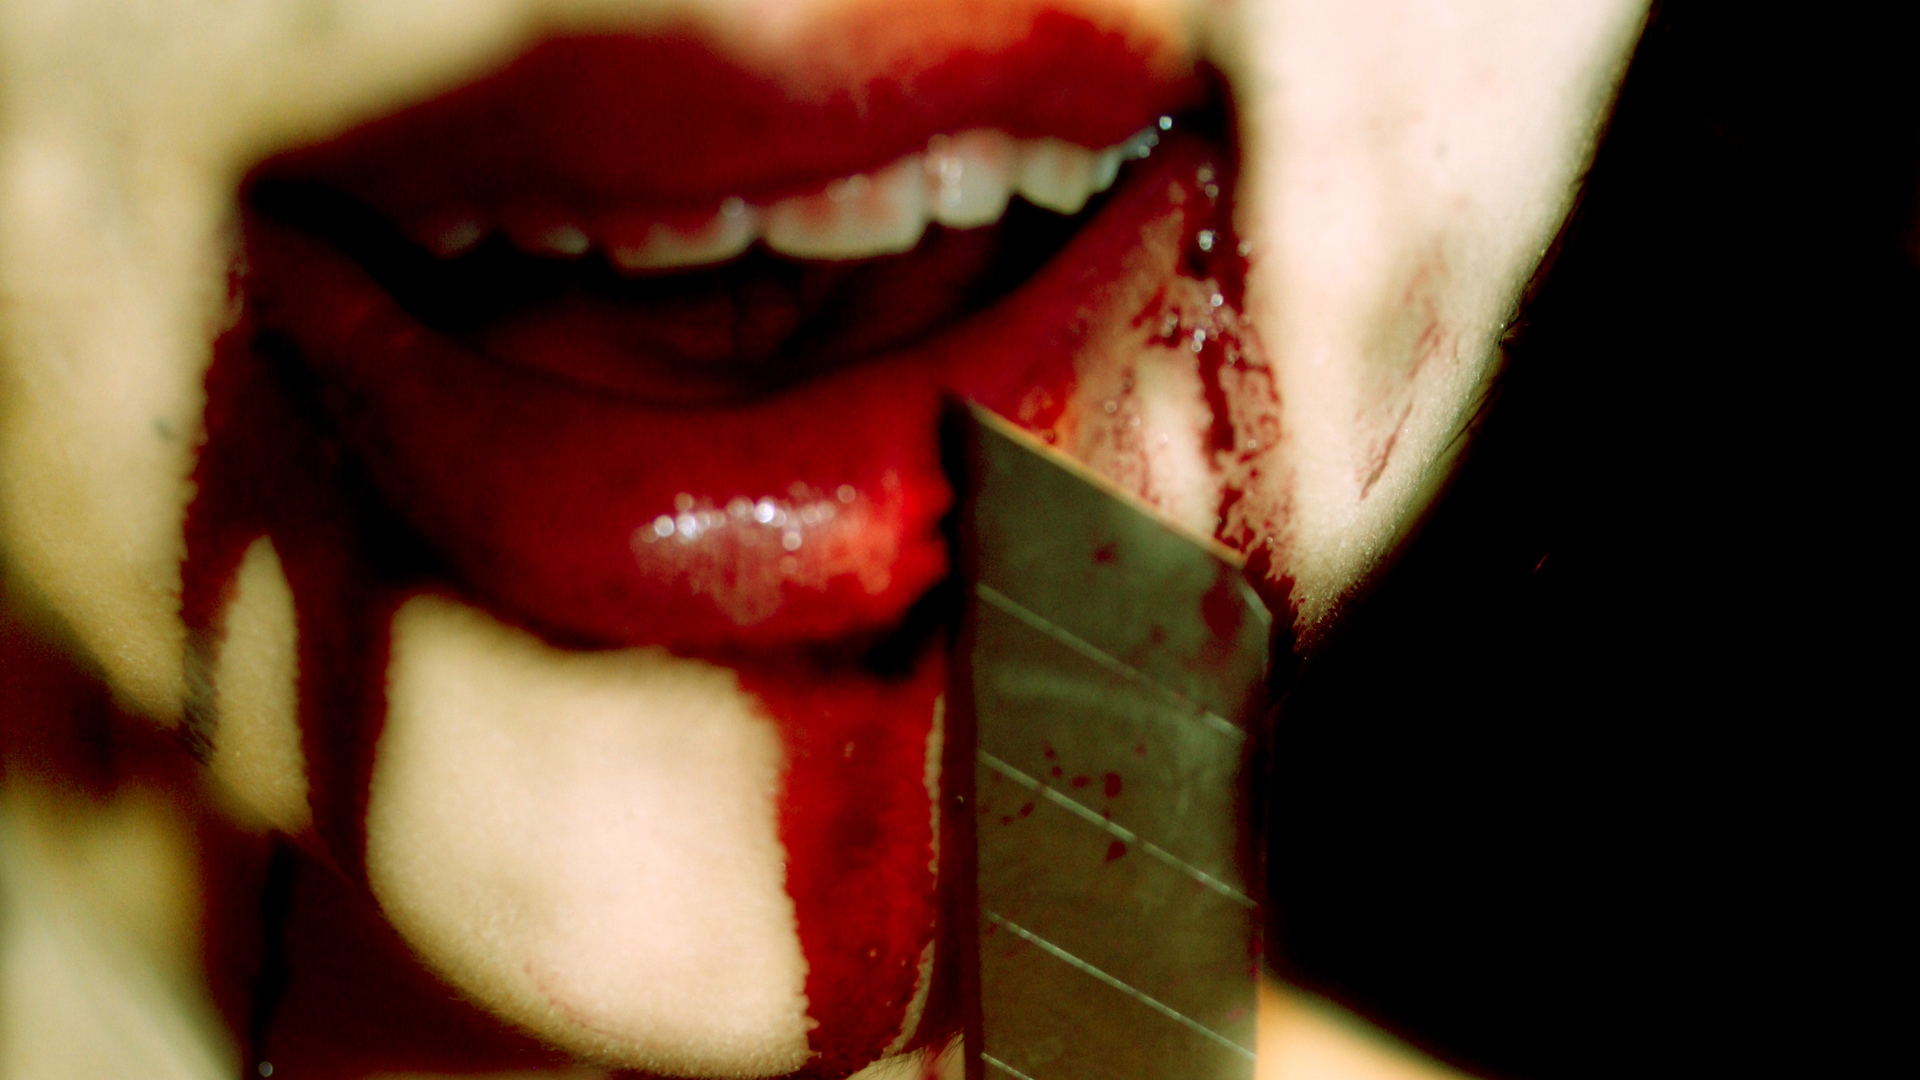 People 1920x1080 gore horror creepy blood mouth blades razor blades lips closeup